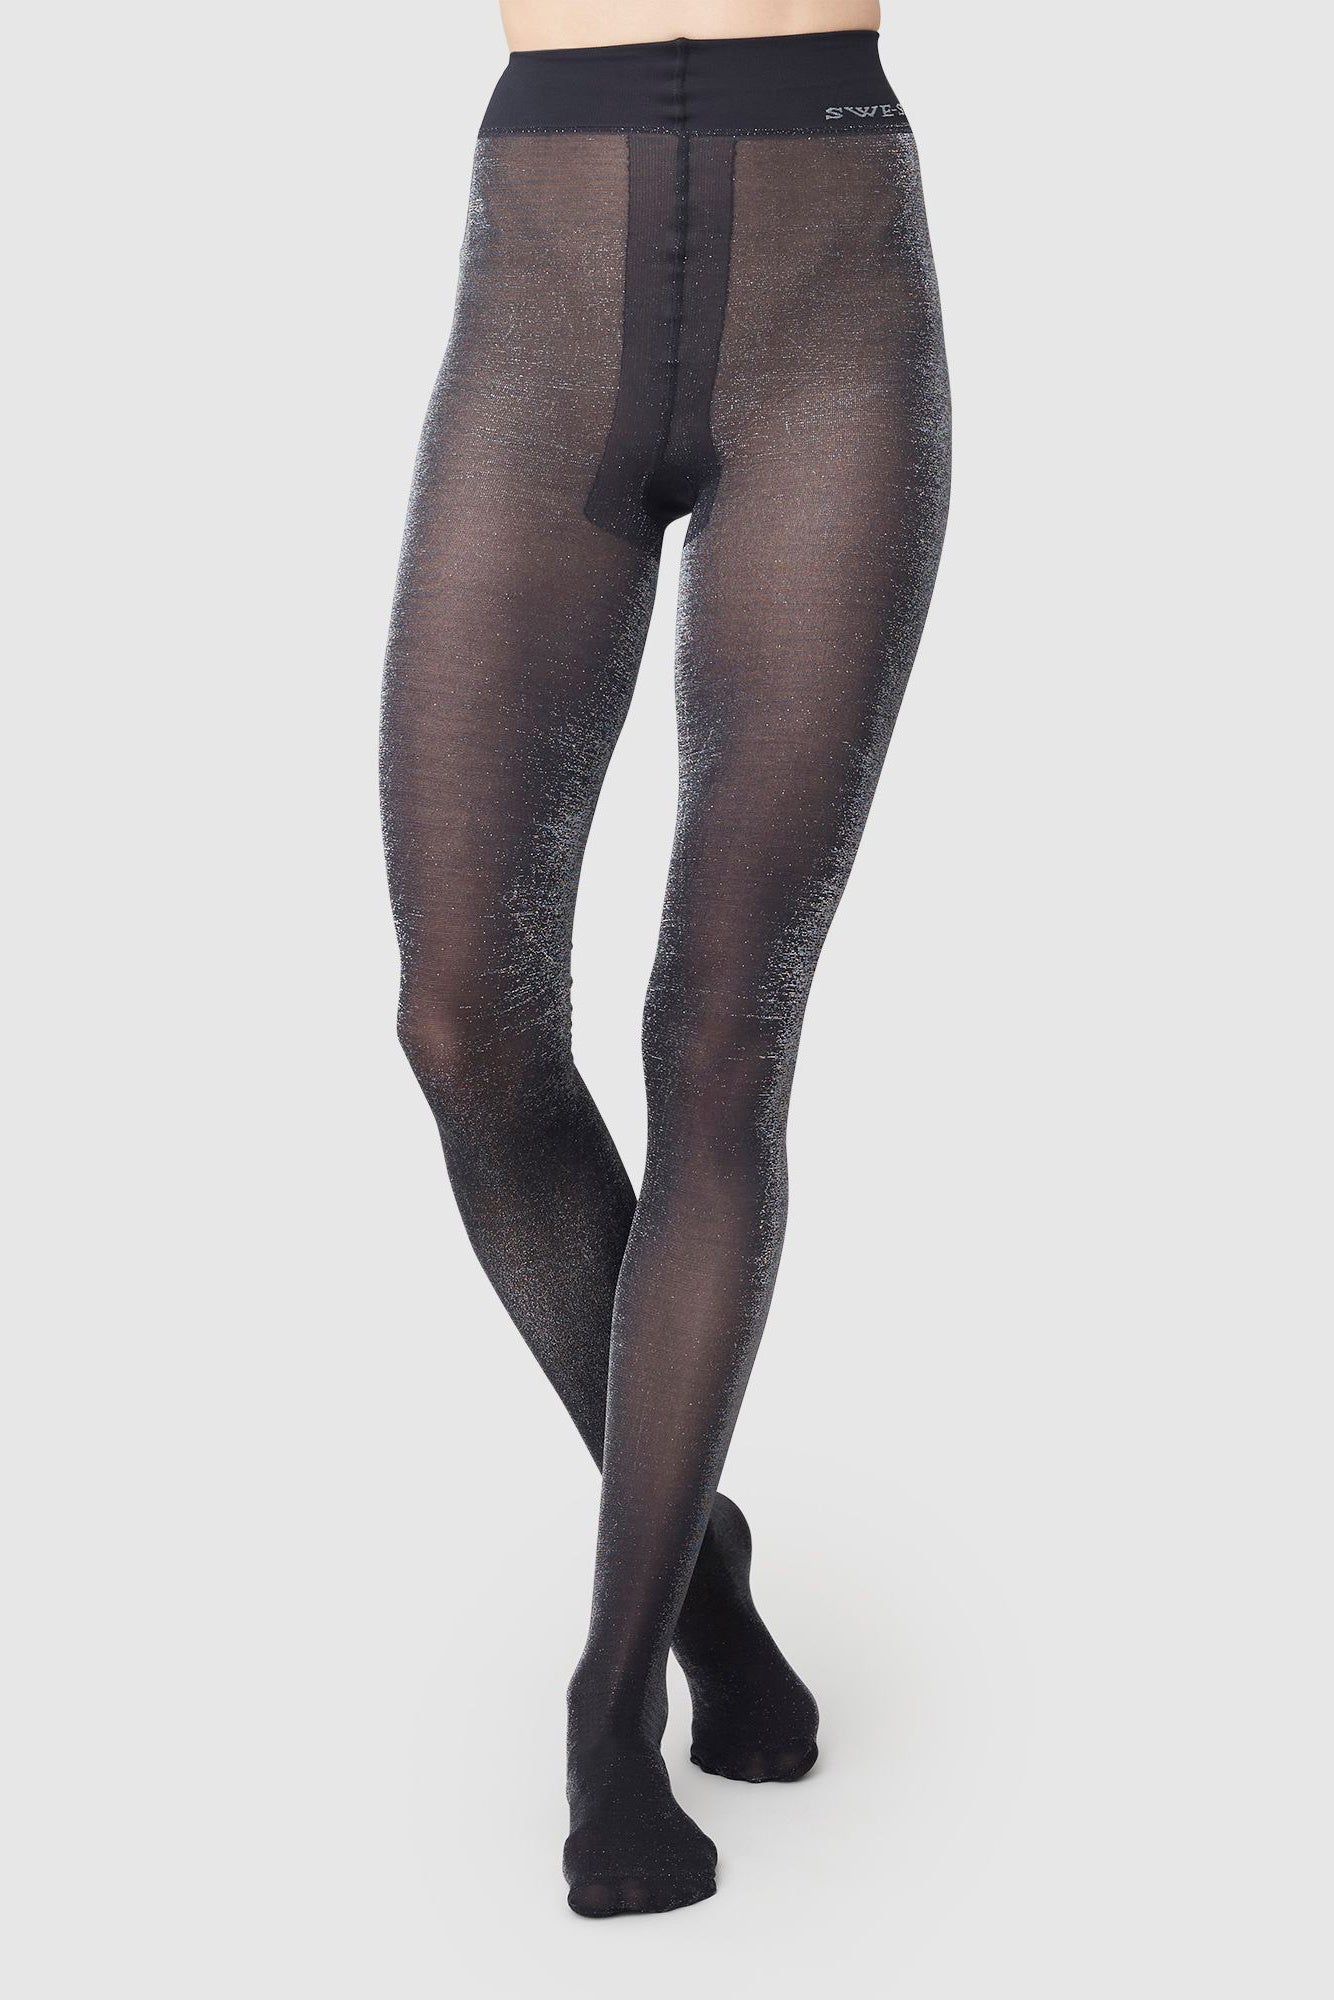 Swedish Stockings Cornelia Shimmery Tights - Black - RUM Amsterdam